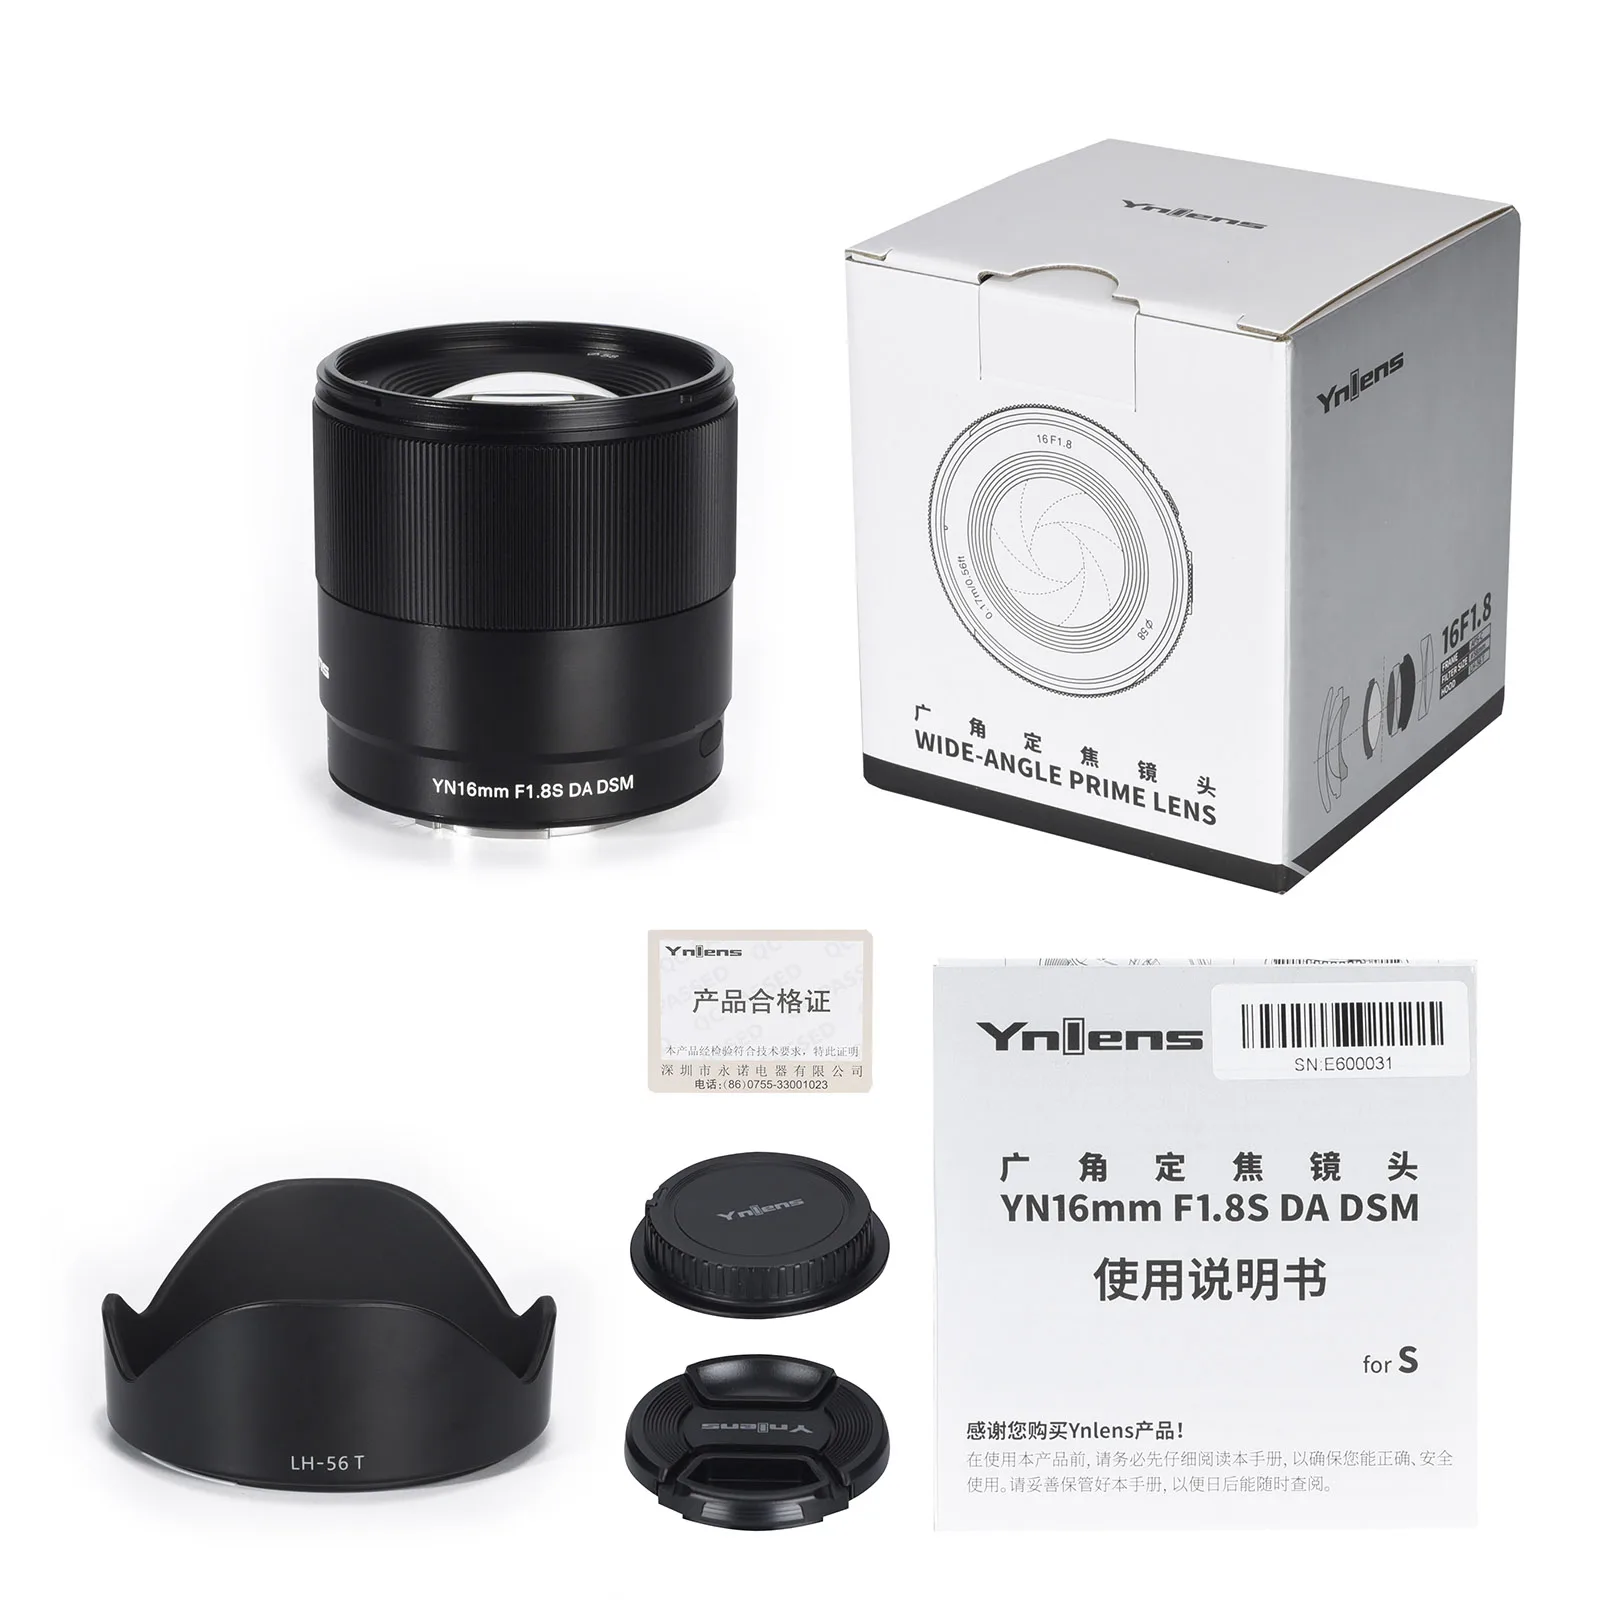 YONGNUO YN16mm F1.8S DA DSM AF Large Aperture Wide Angel Lens for Sony E Mount A6500 6300 A6400 A6300 16mm F1.8 Lens images - 6